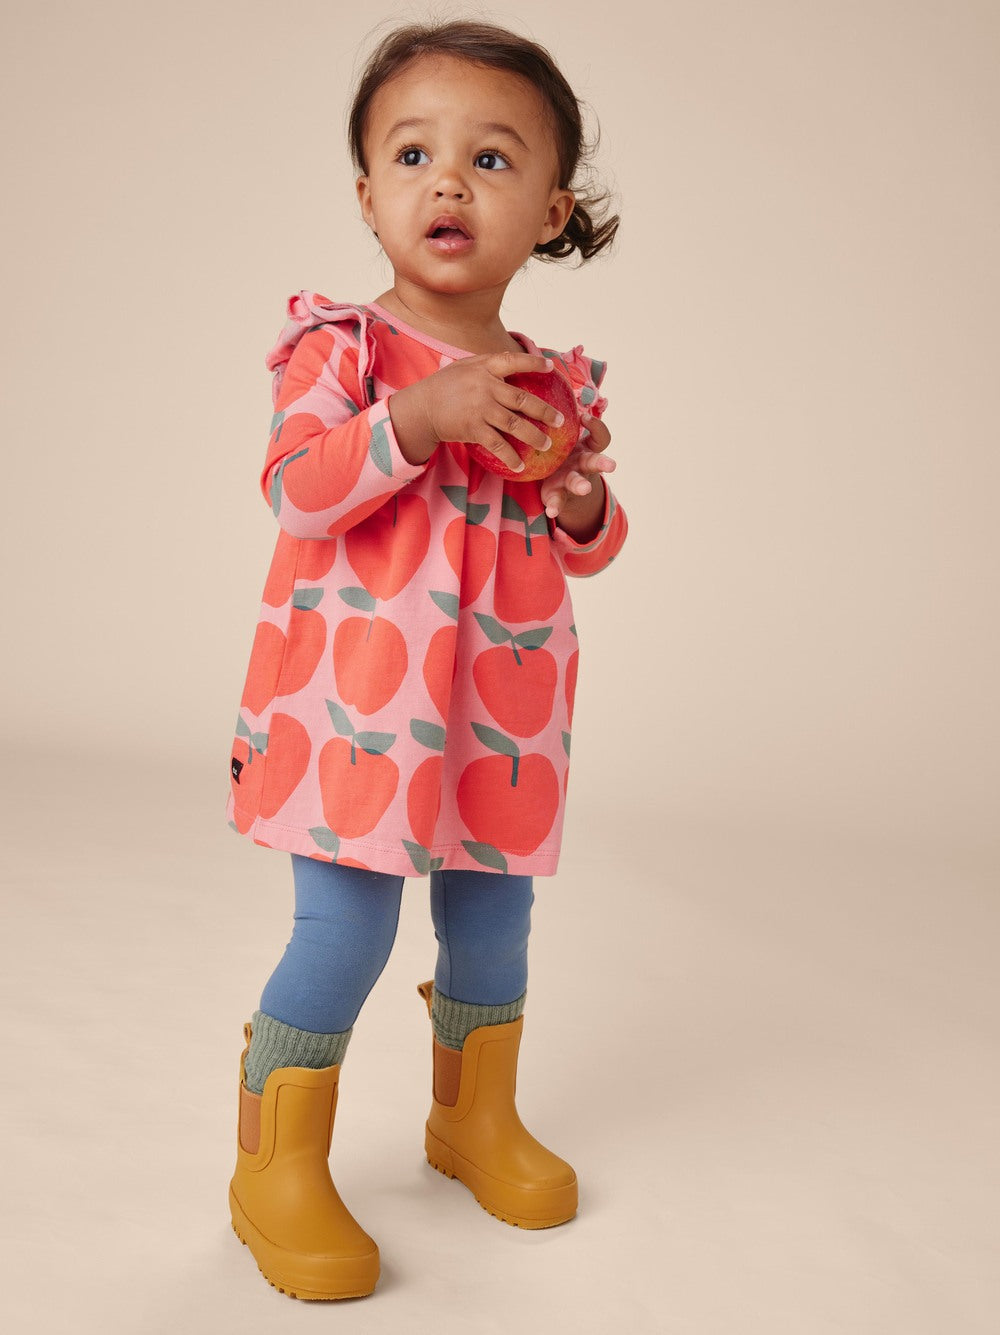 Mighty Mini Baby Dress - Normandy Apple's